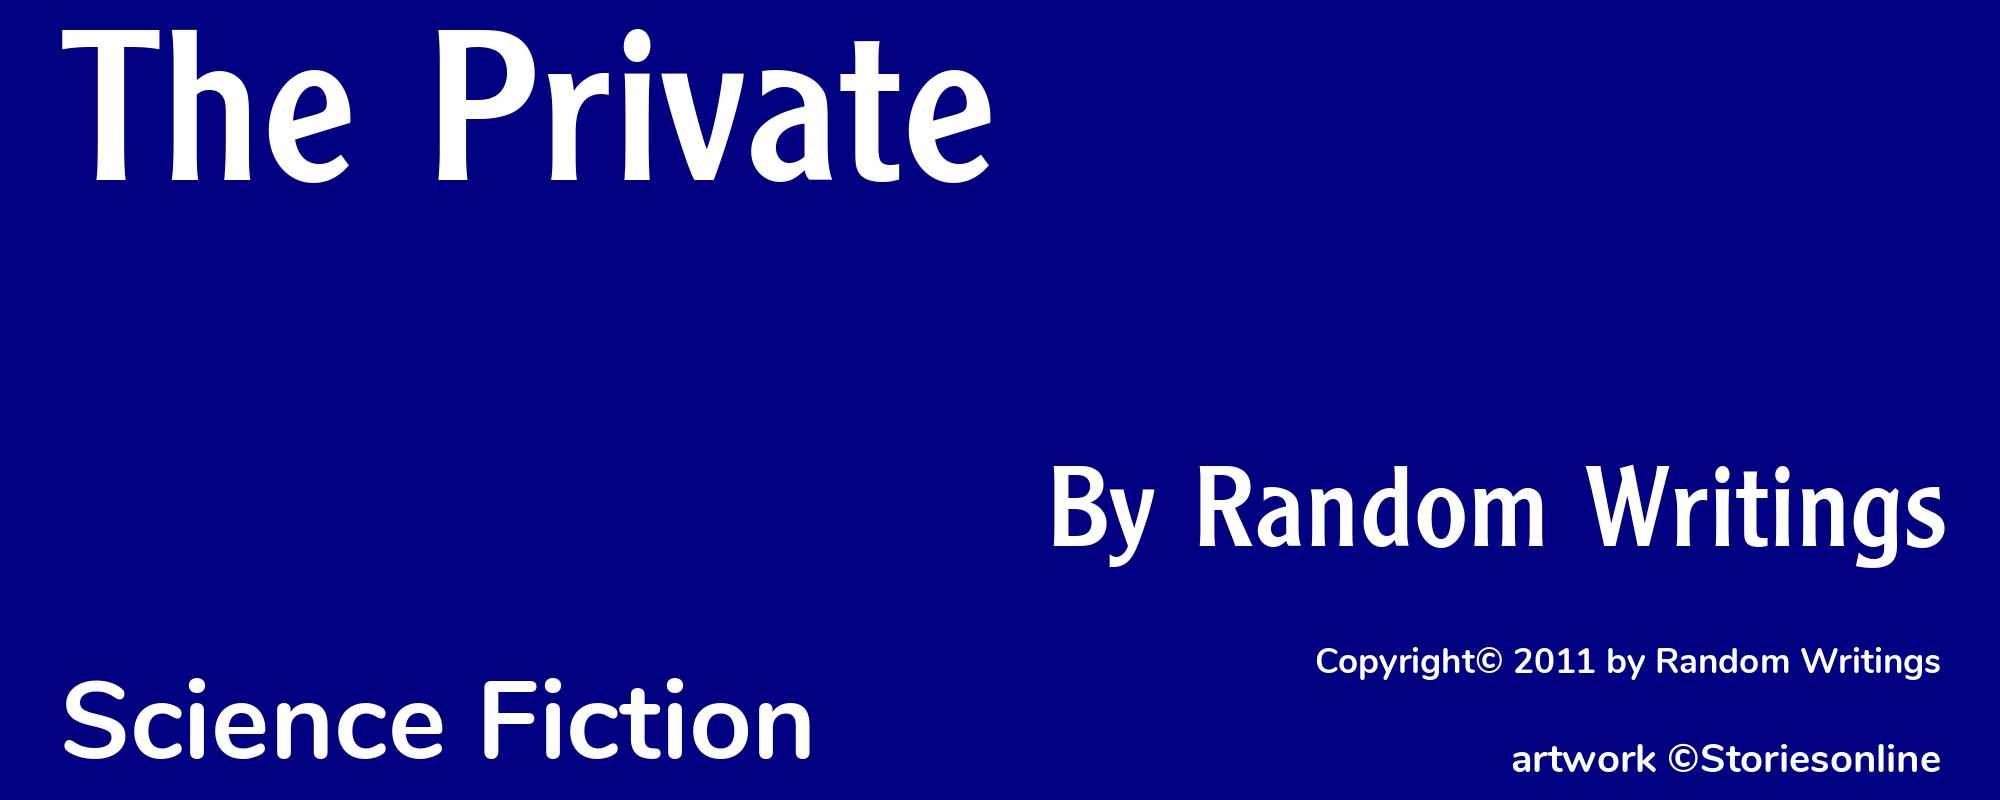 The Private - Cover